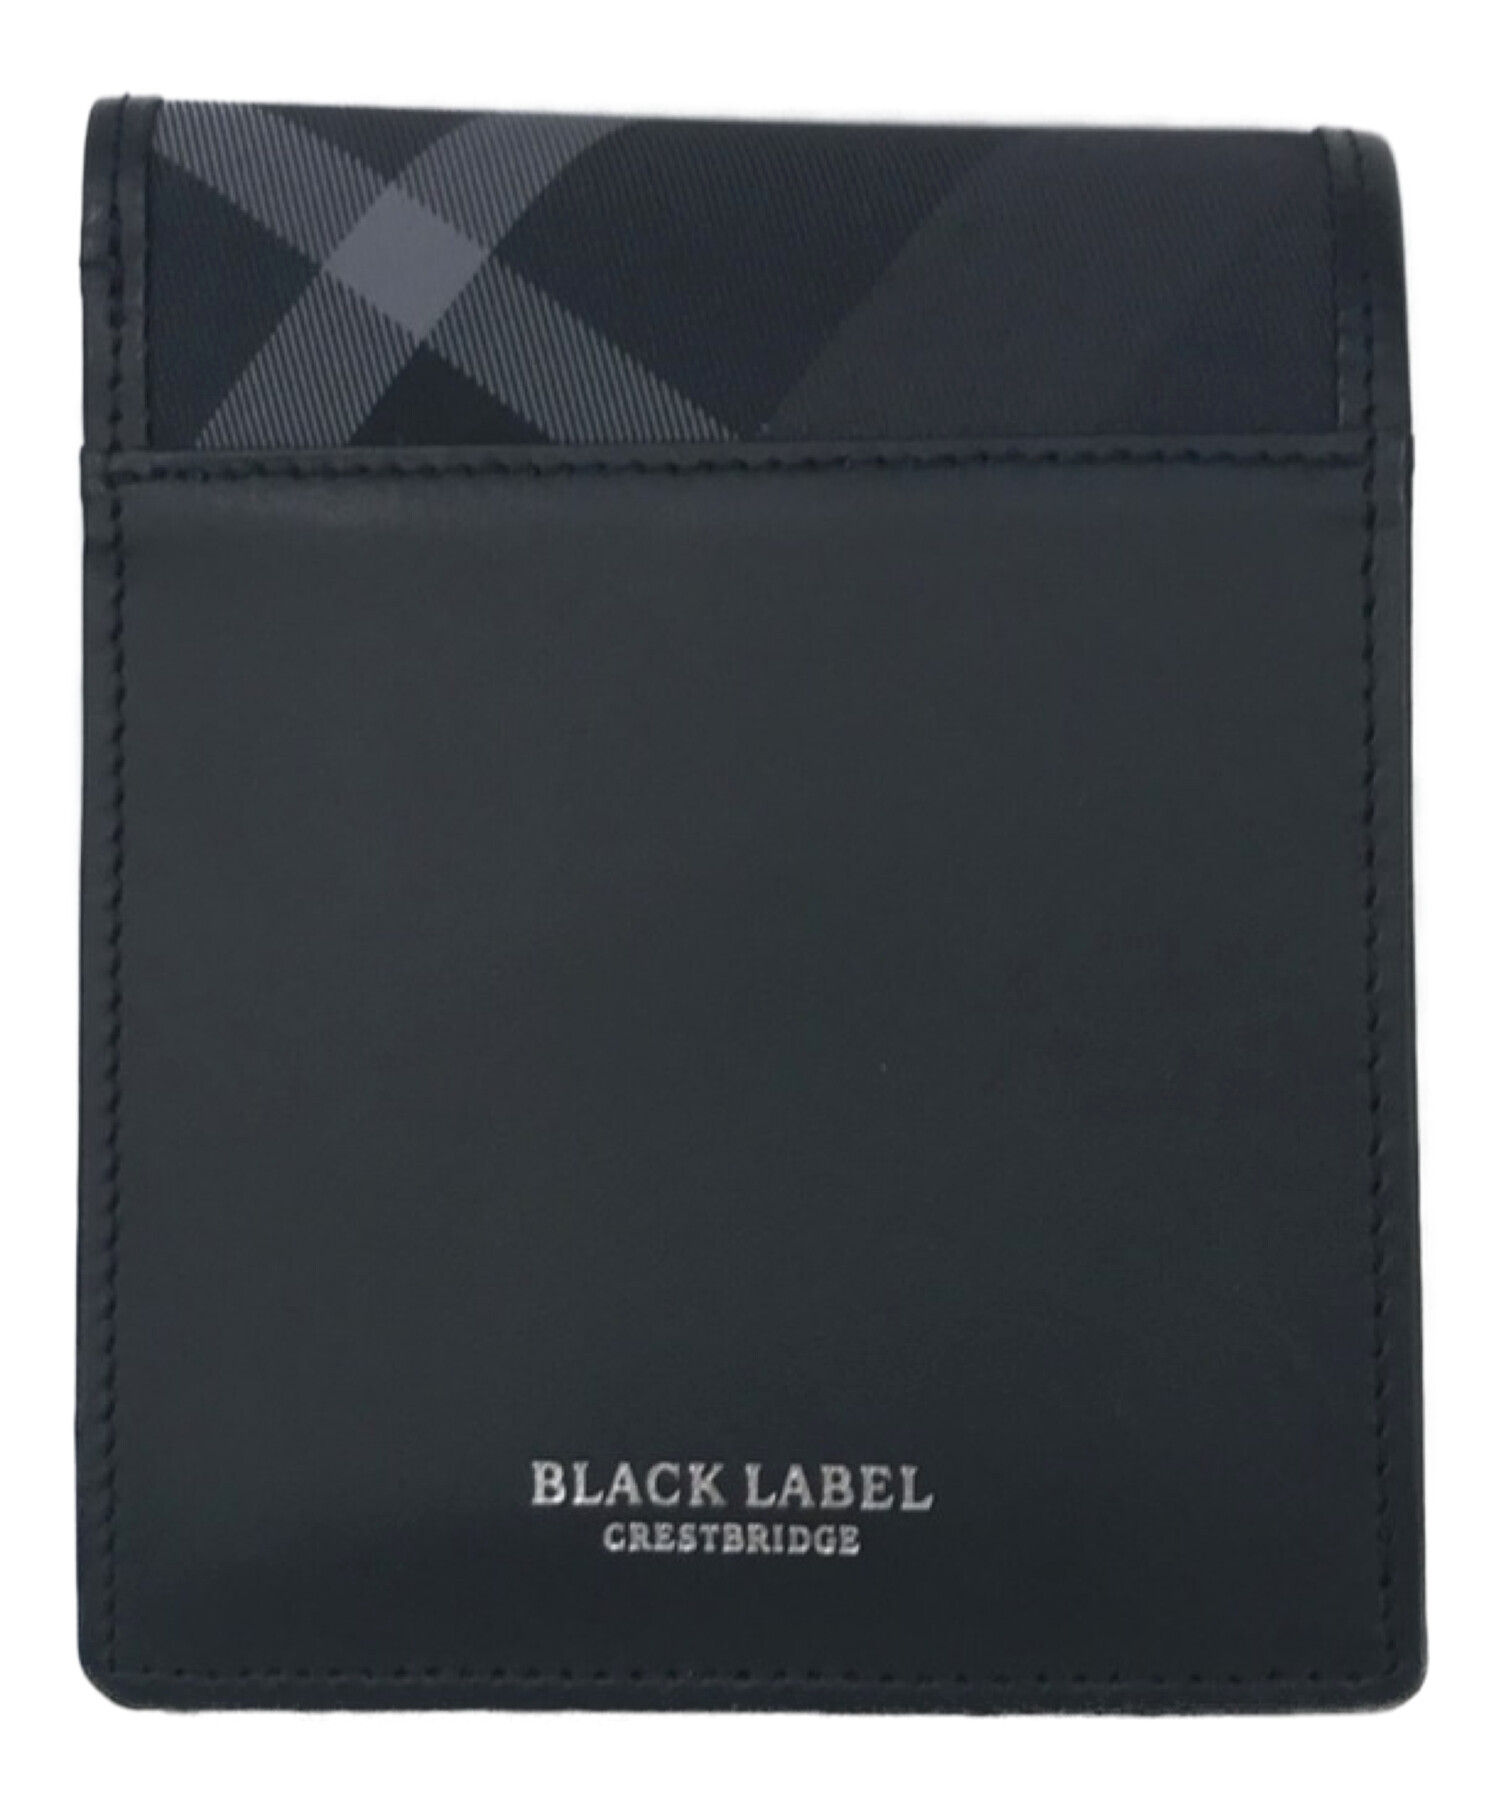 BLACK LABEL CRESTBRIDGE (ブラックレーベル クレストブリッジ) 財布 ブラック